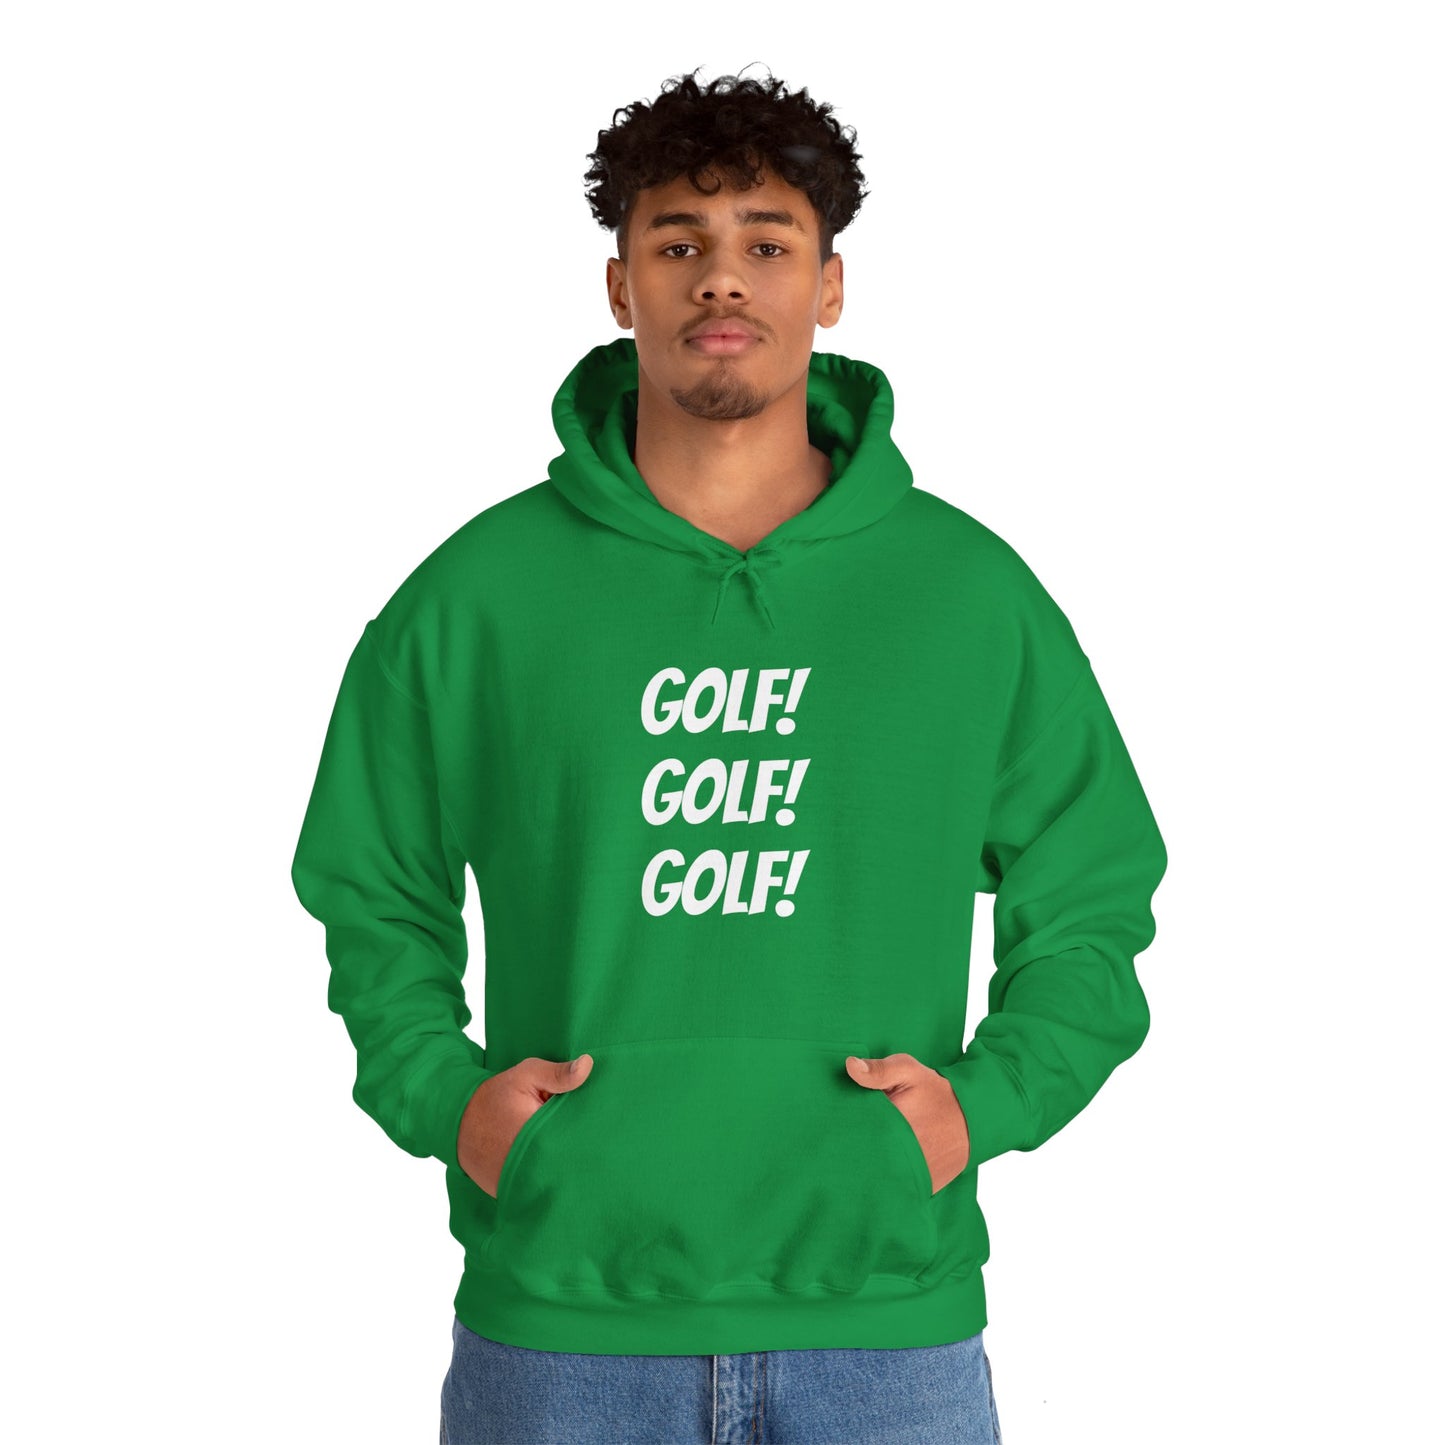 GOLF! GOLF! GOLF!™ Hooded Sweatshirt